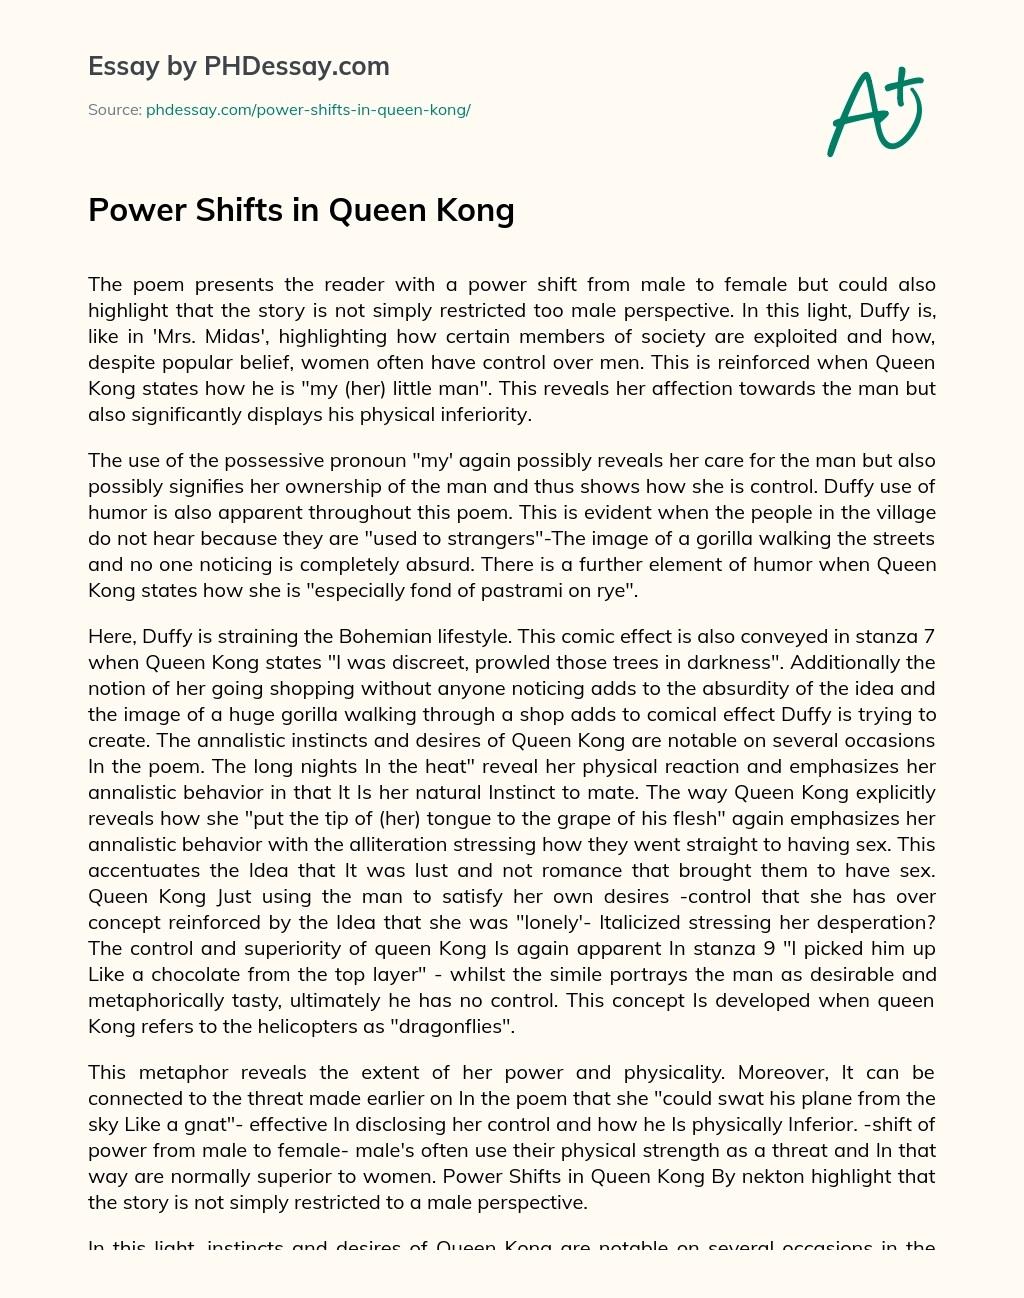 Power Shifts in Queen Kong essay